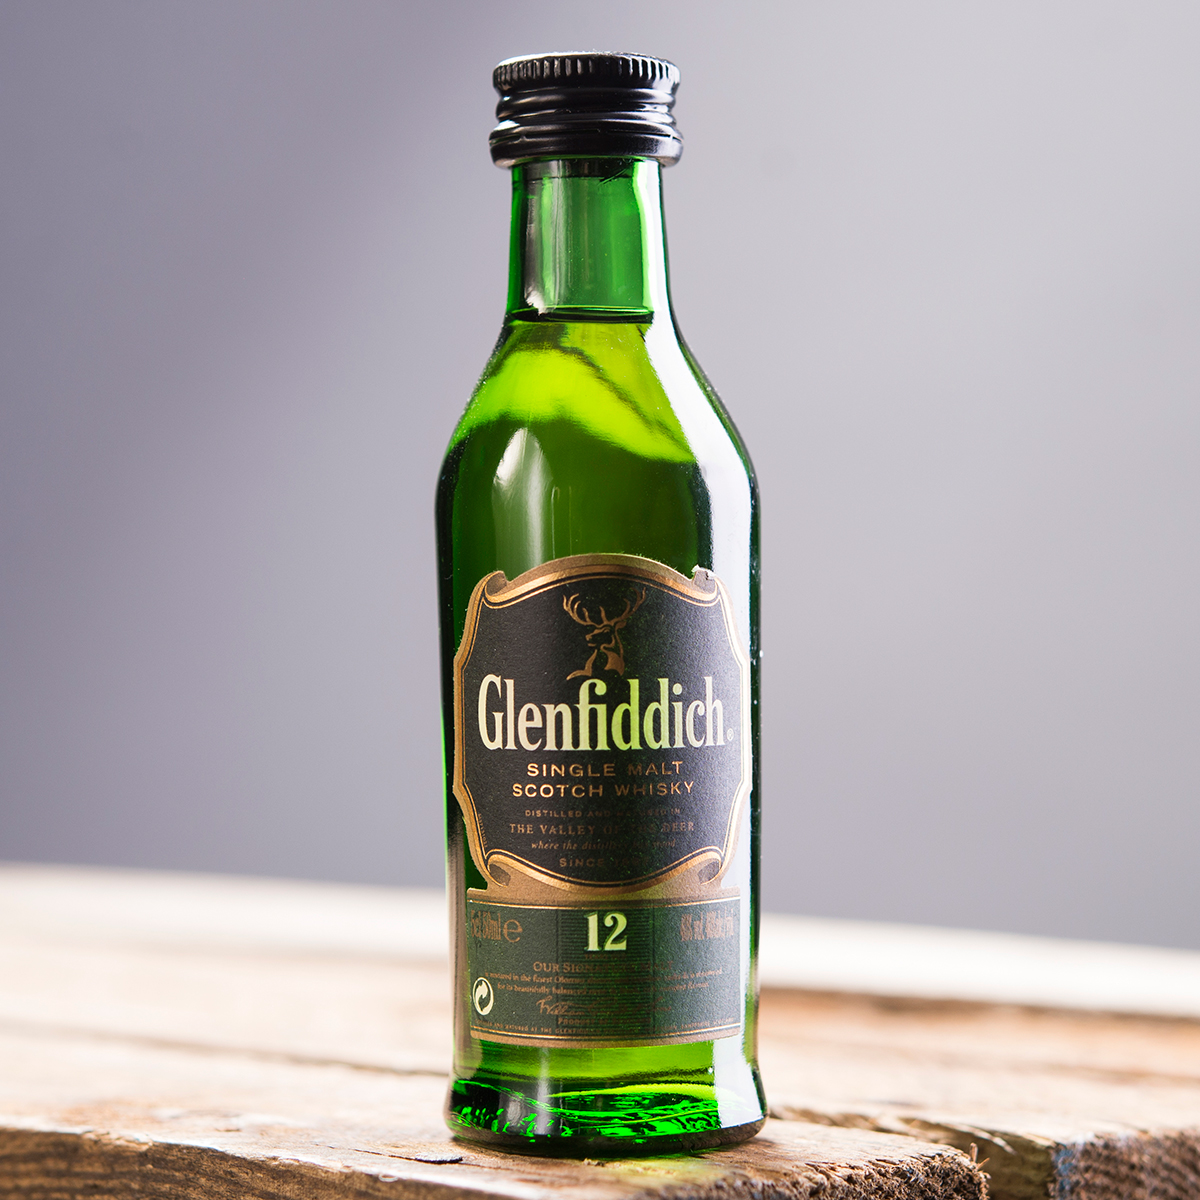 Personalised Whisky Tumbler & Glenfiddich Miniature - Vintage Blend